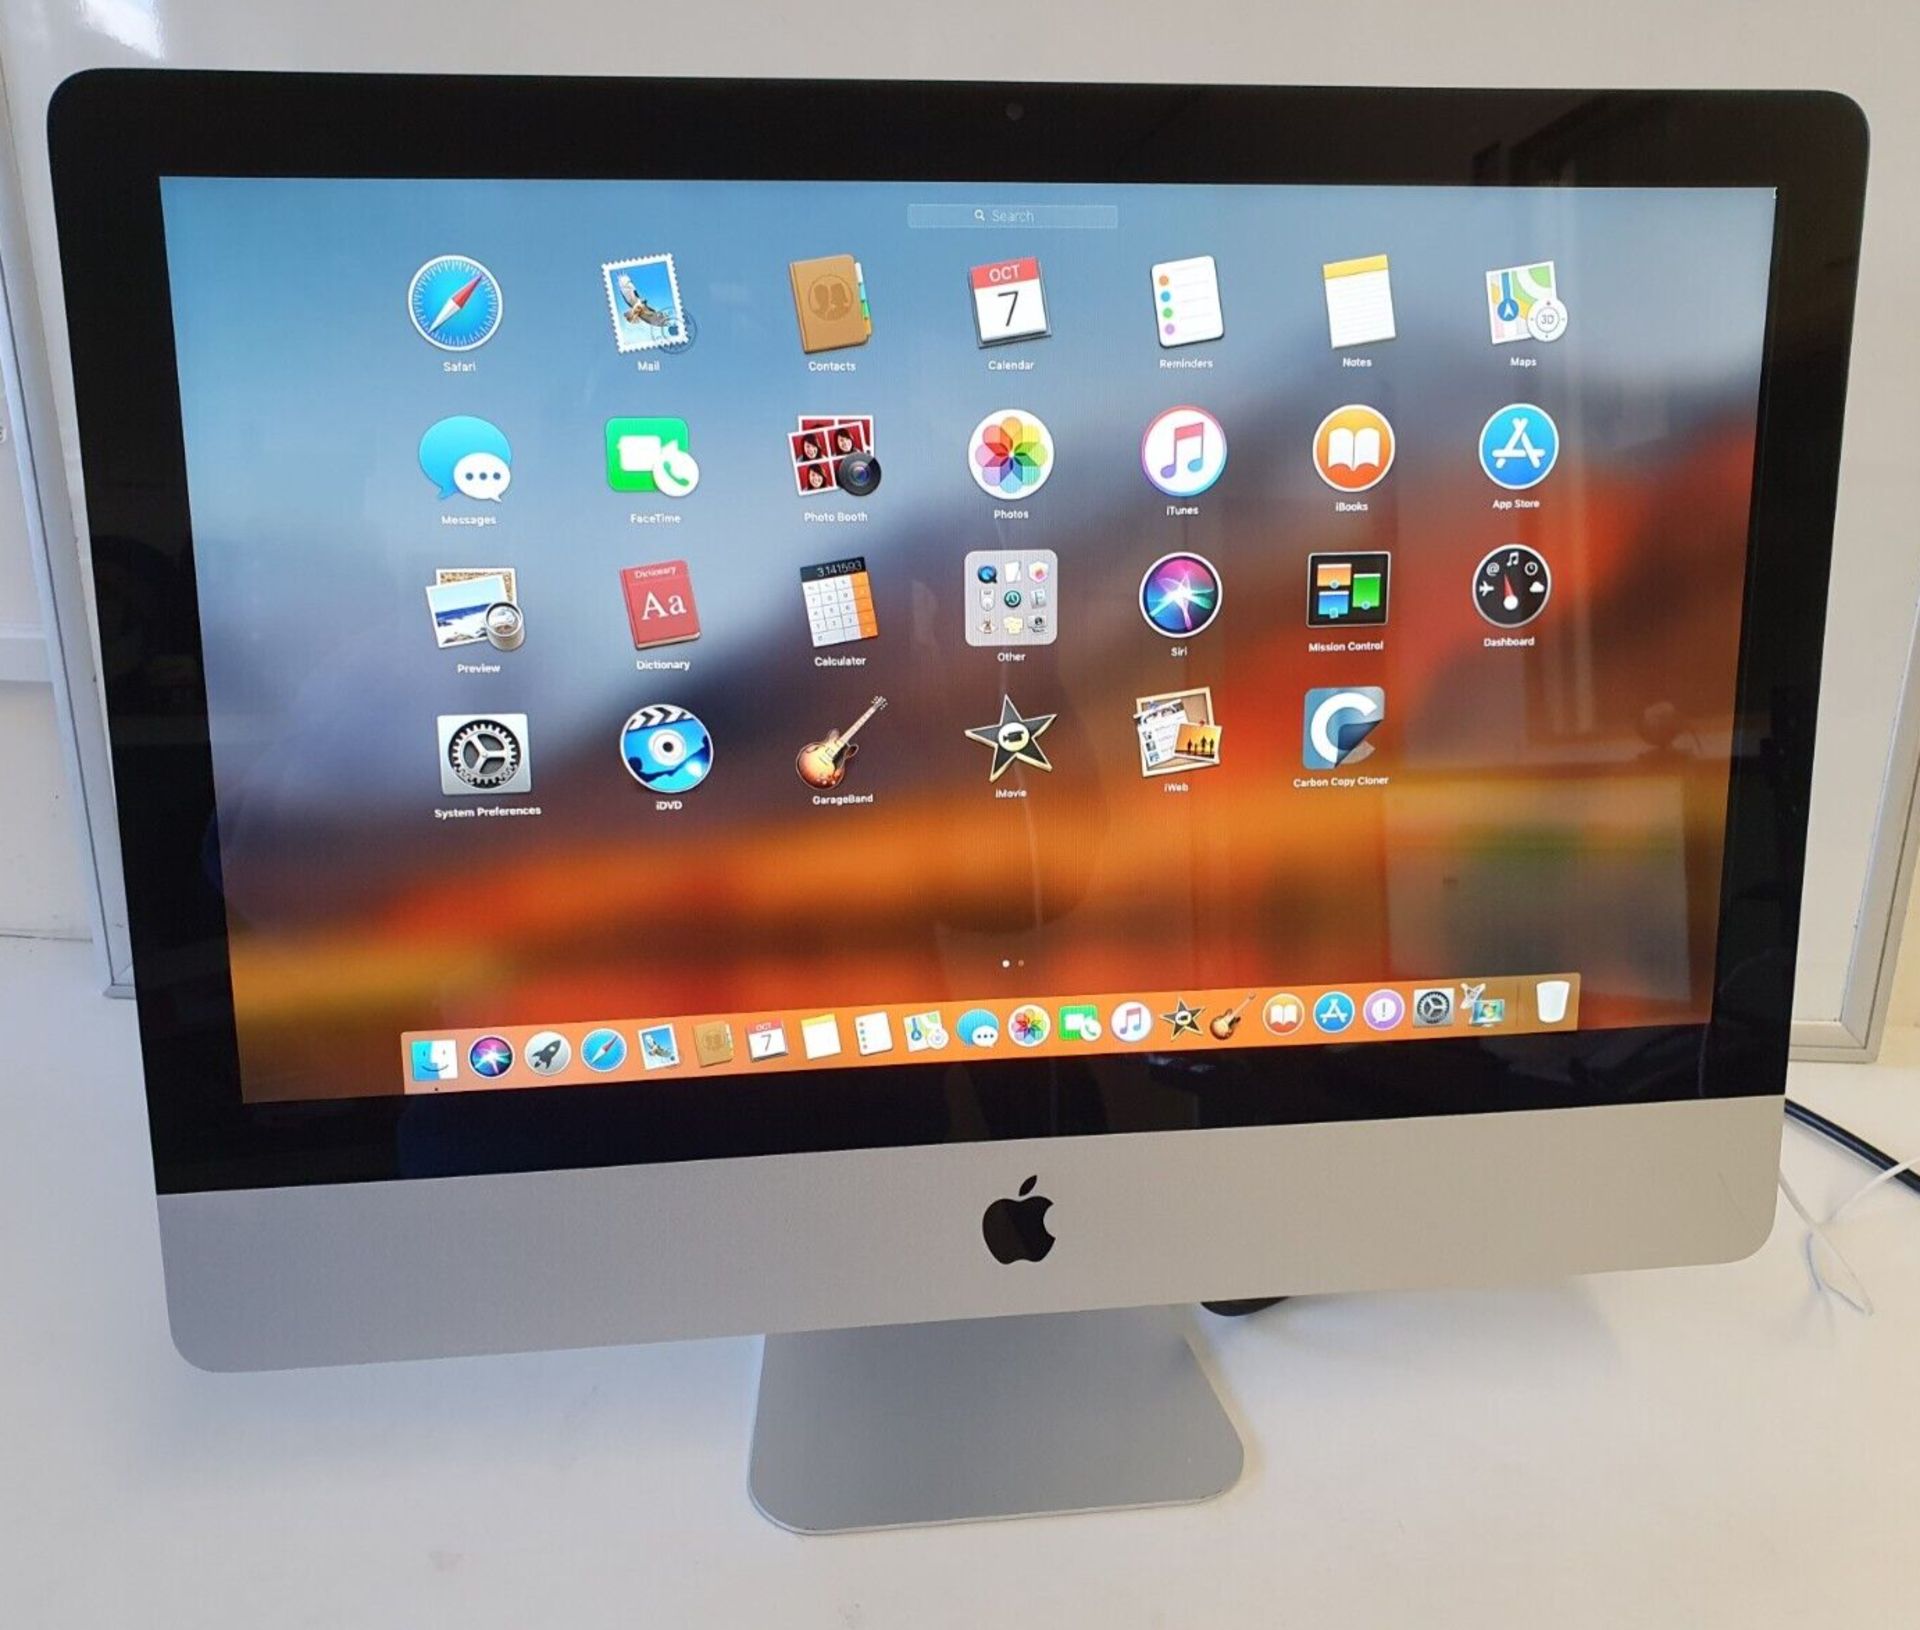 Apple iMac 21.5” OS X High Sierra Intel Core i5 8GB Memory 500GB HD Radeon WiFi Bluetooth Office - Image 2 of 4